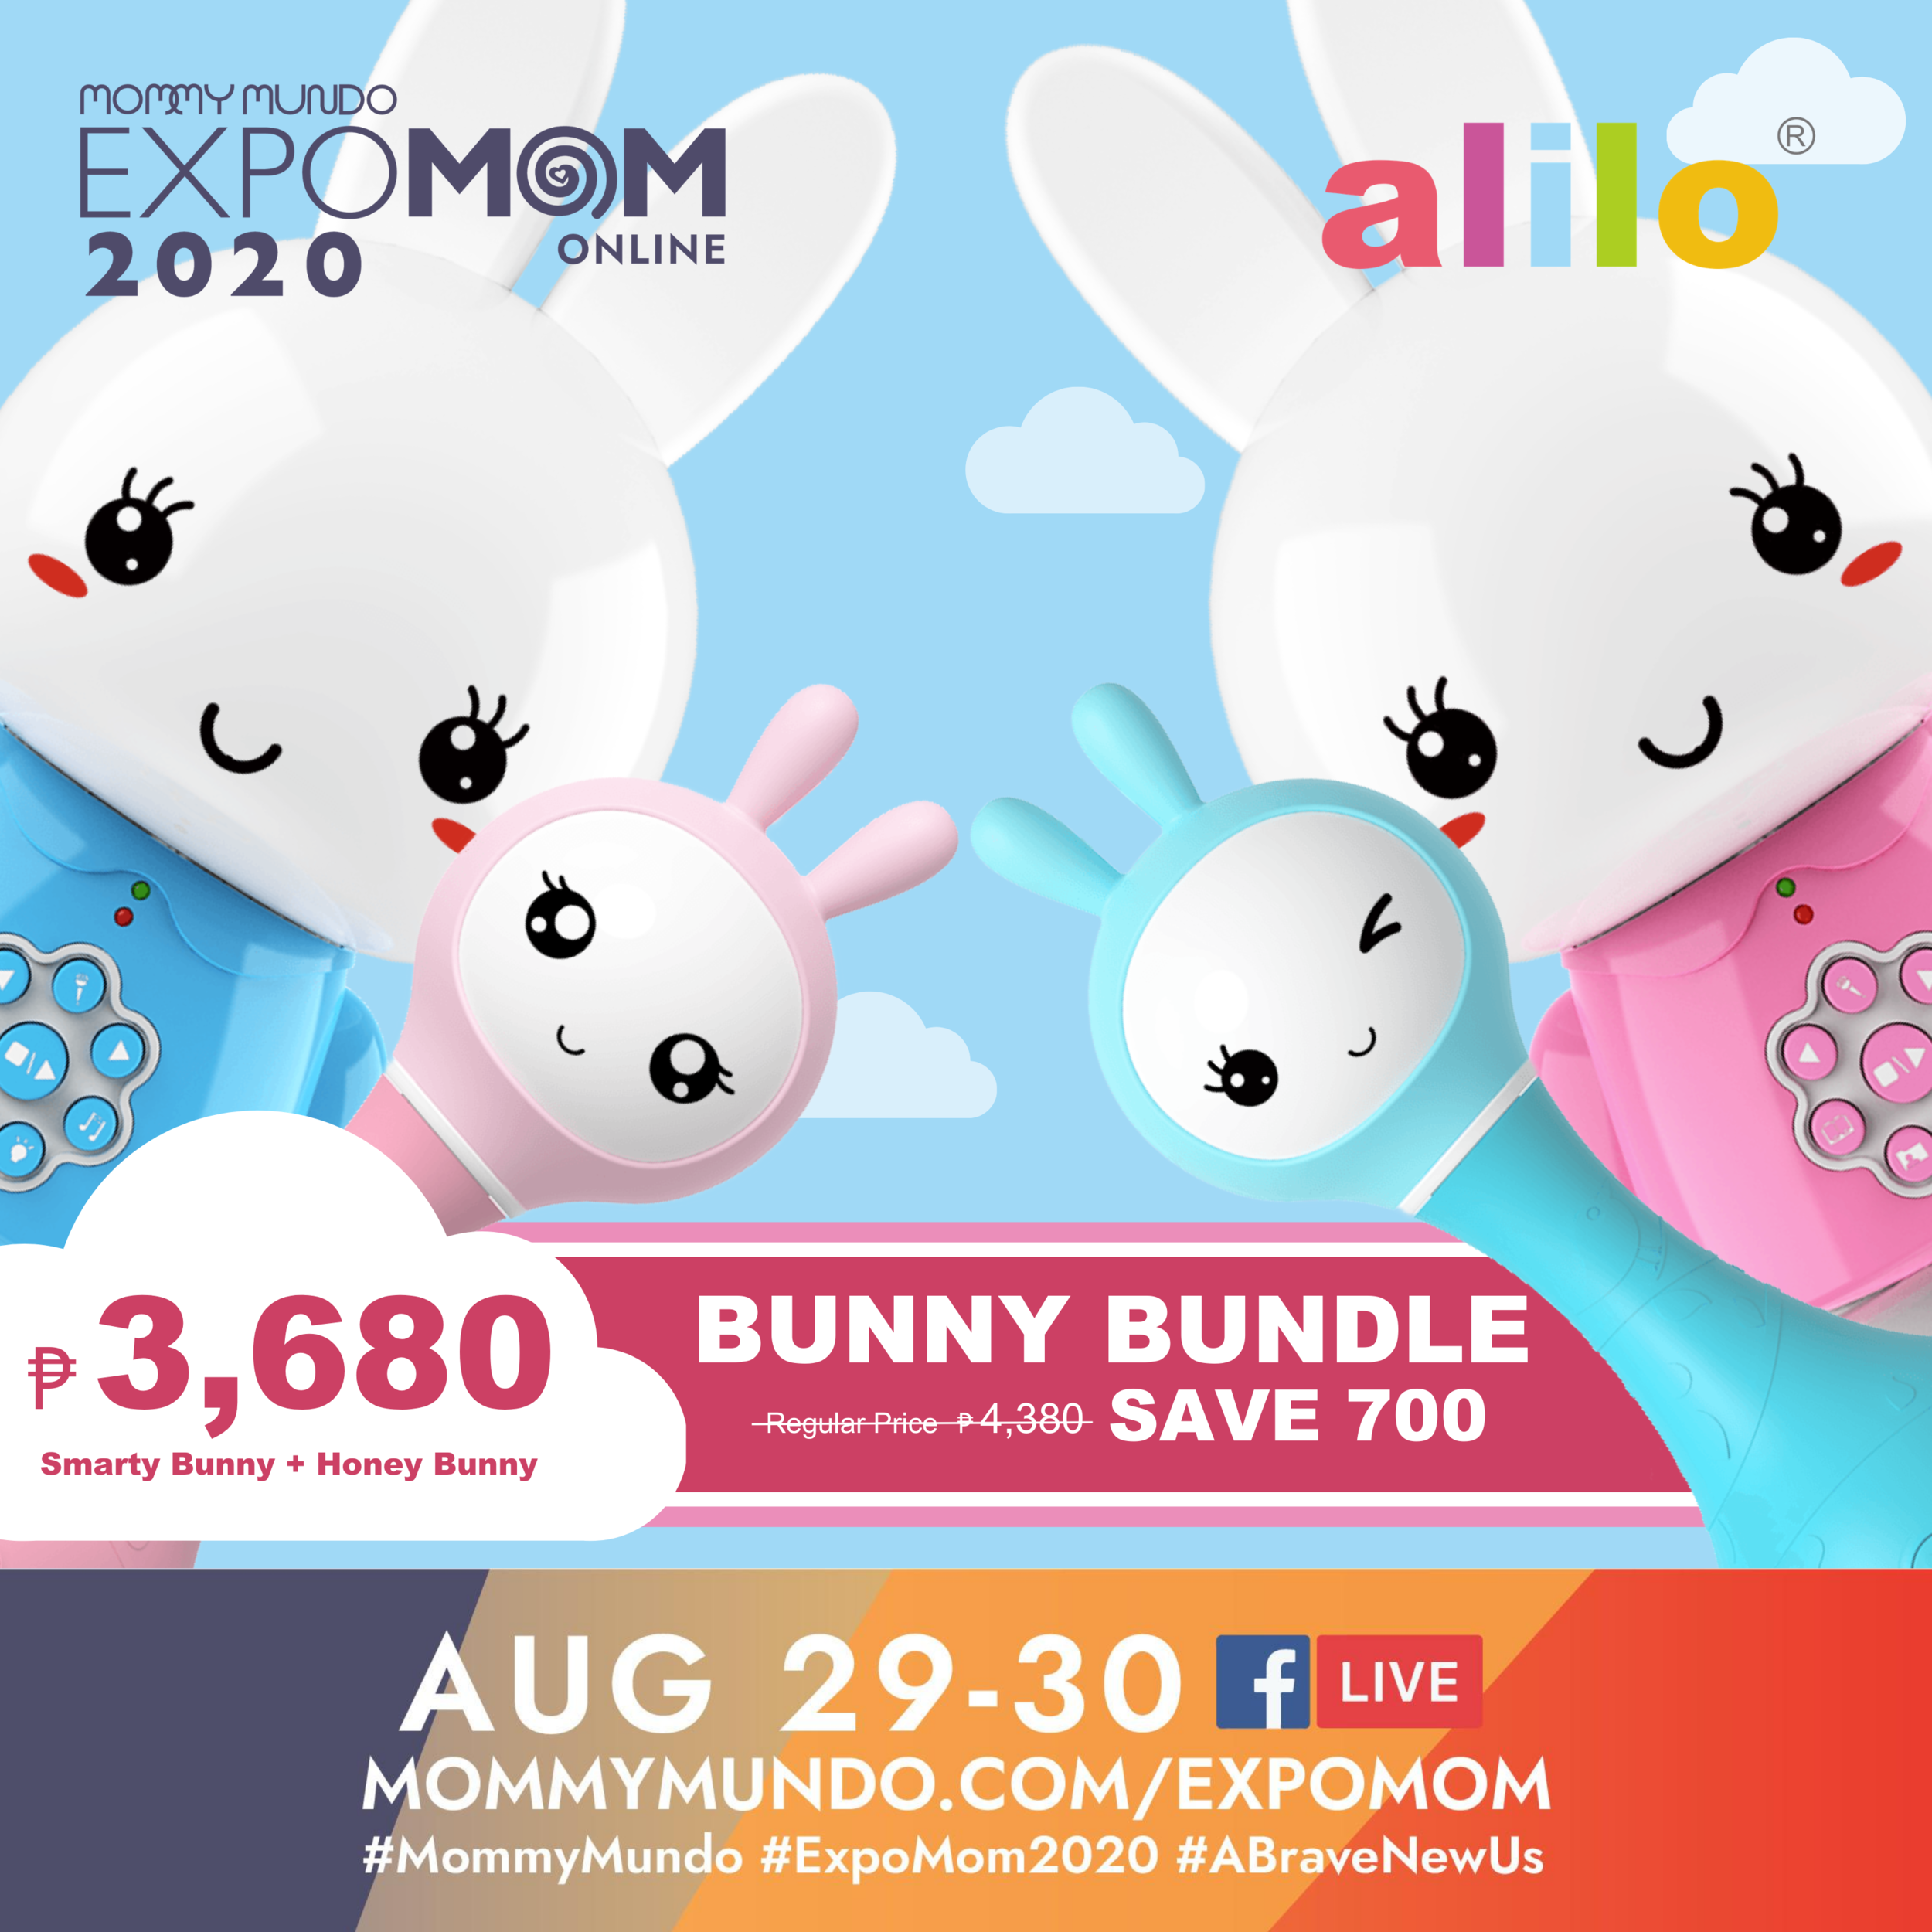 Mommy Mundo ExpoMom 2020 Online _ Alilo Bundle Save P700.png